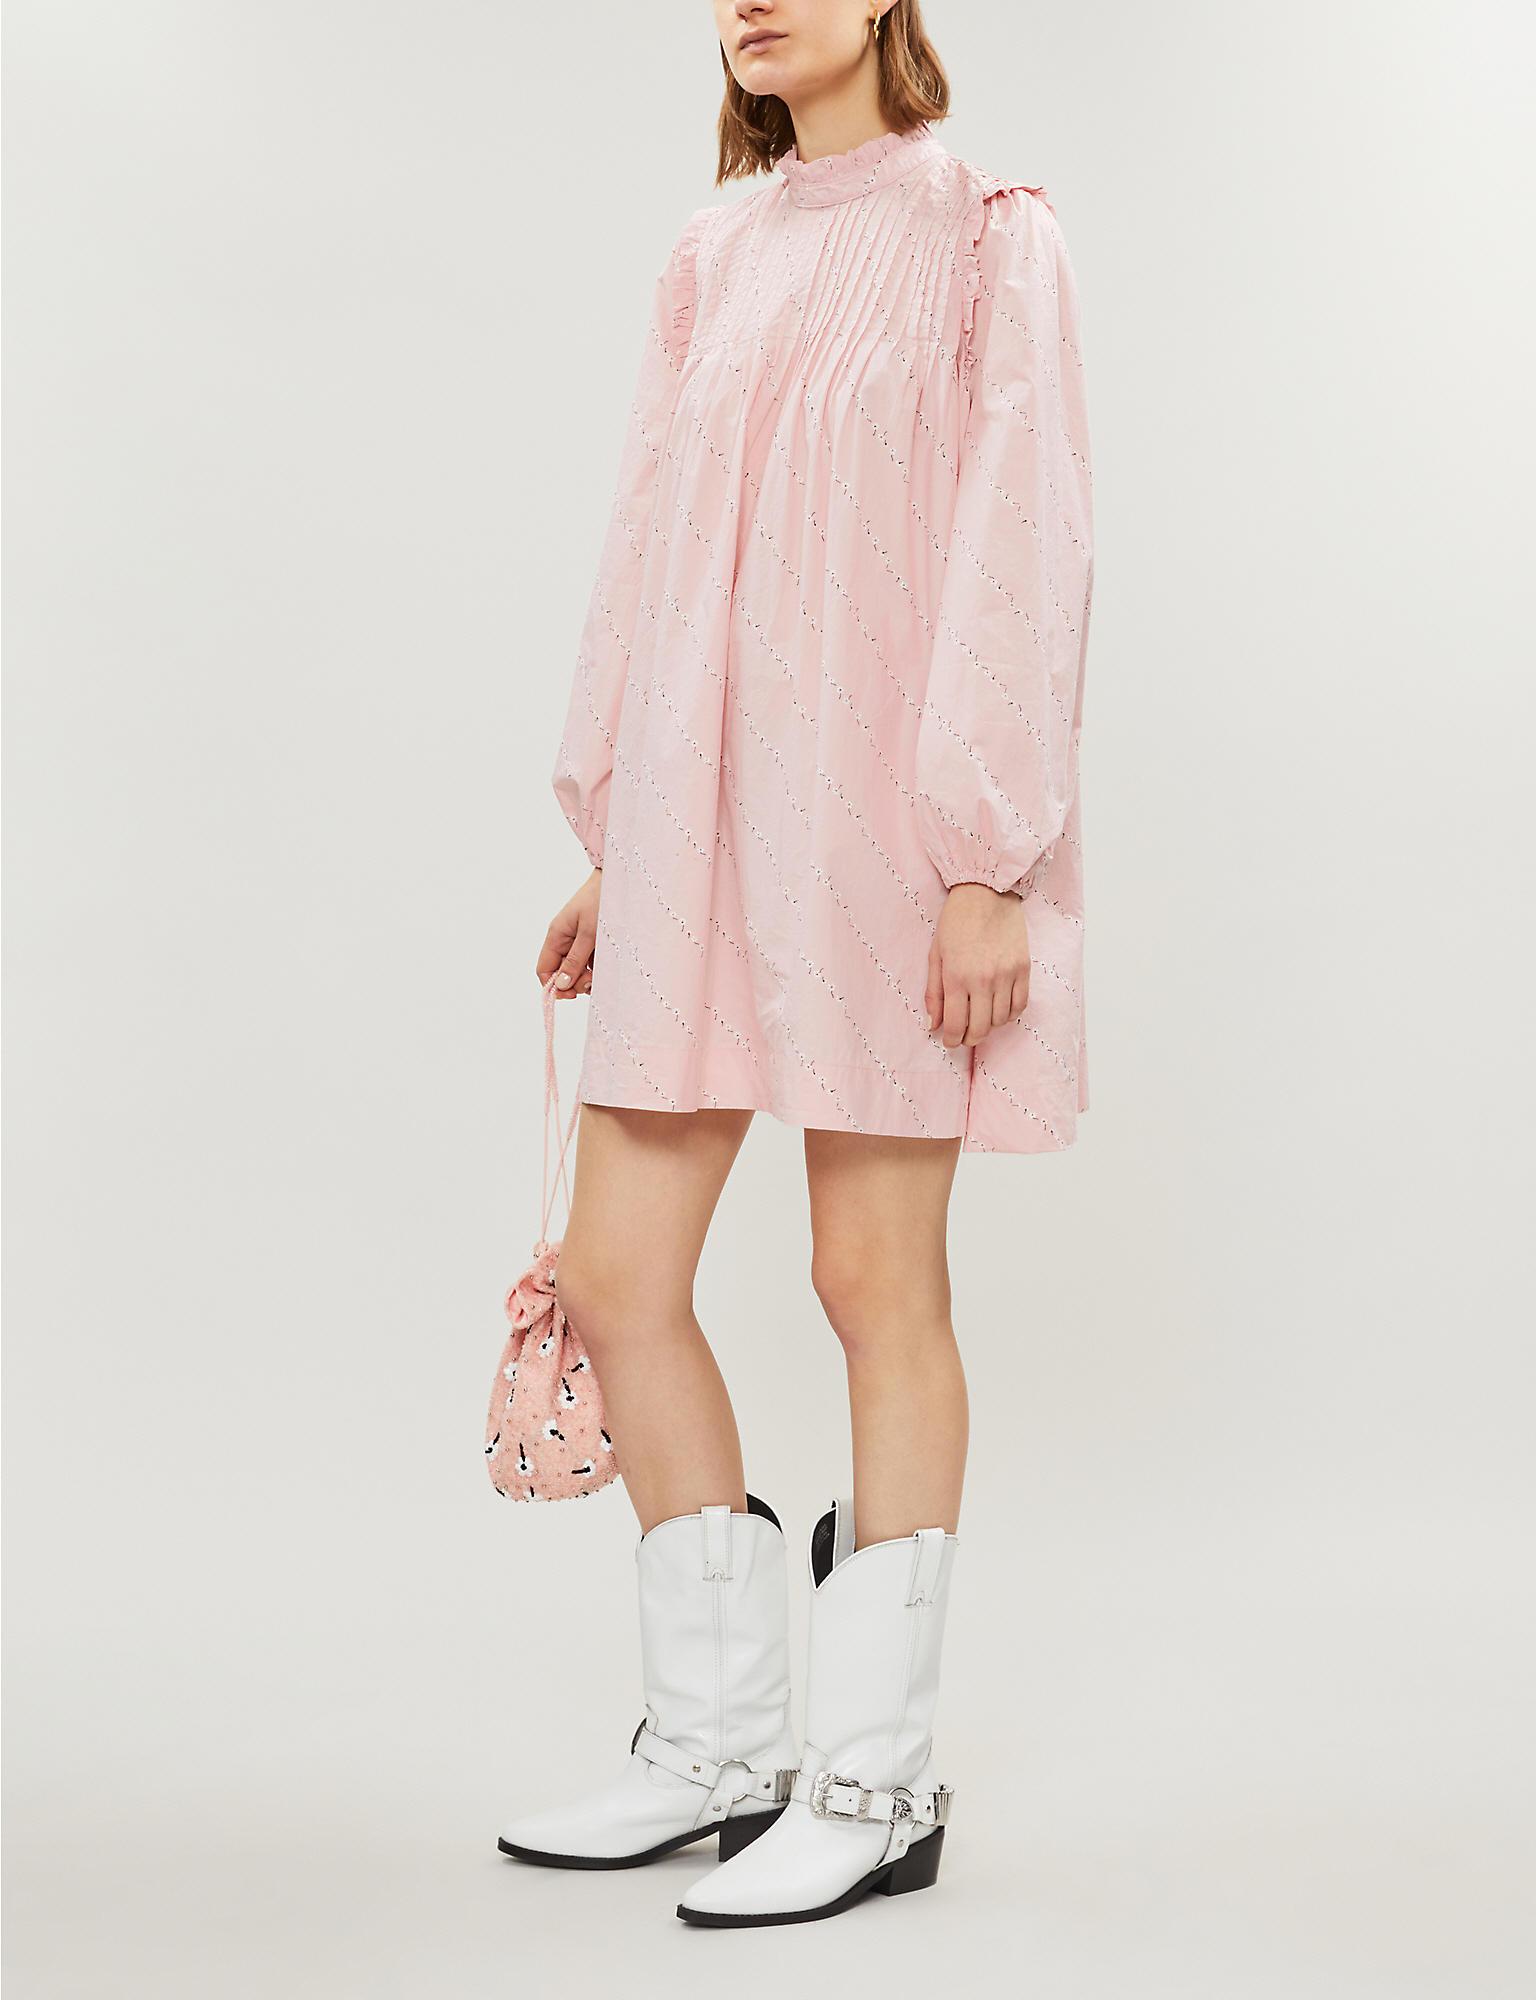 Ganni Weston Floral-print Cotton Dress in Pink - Lyst